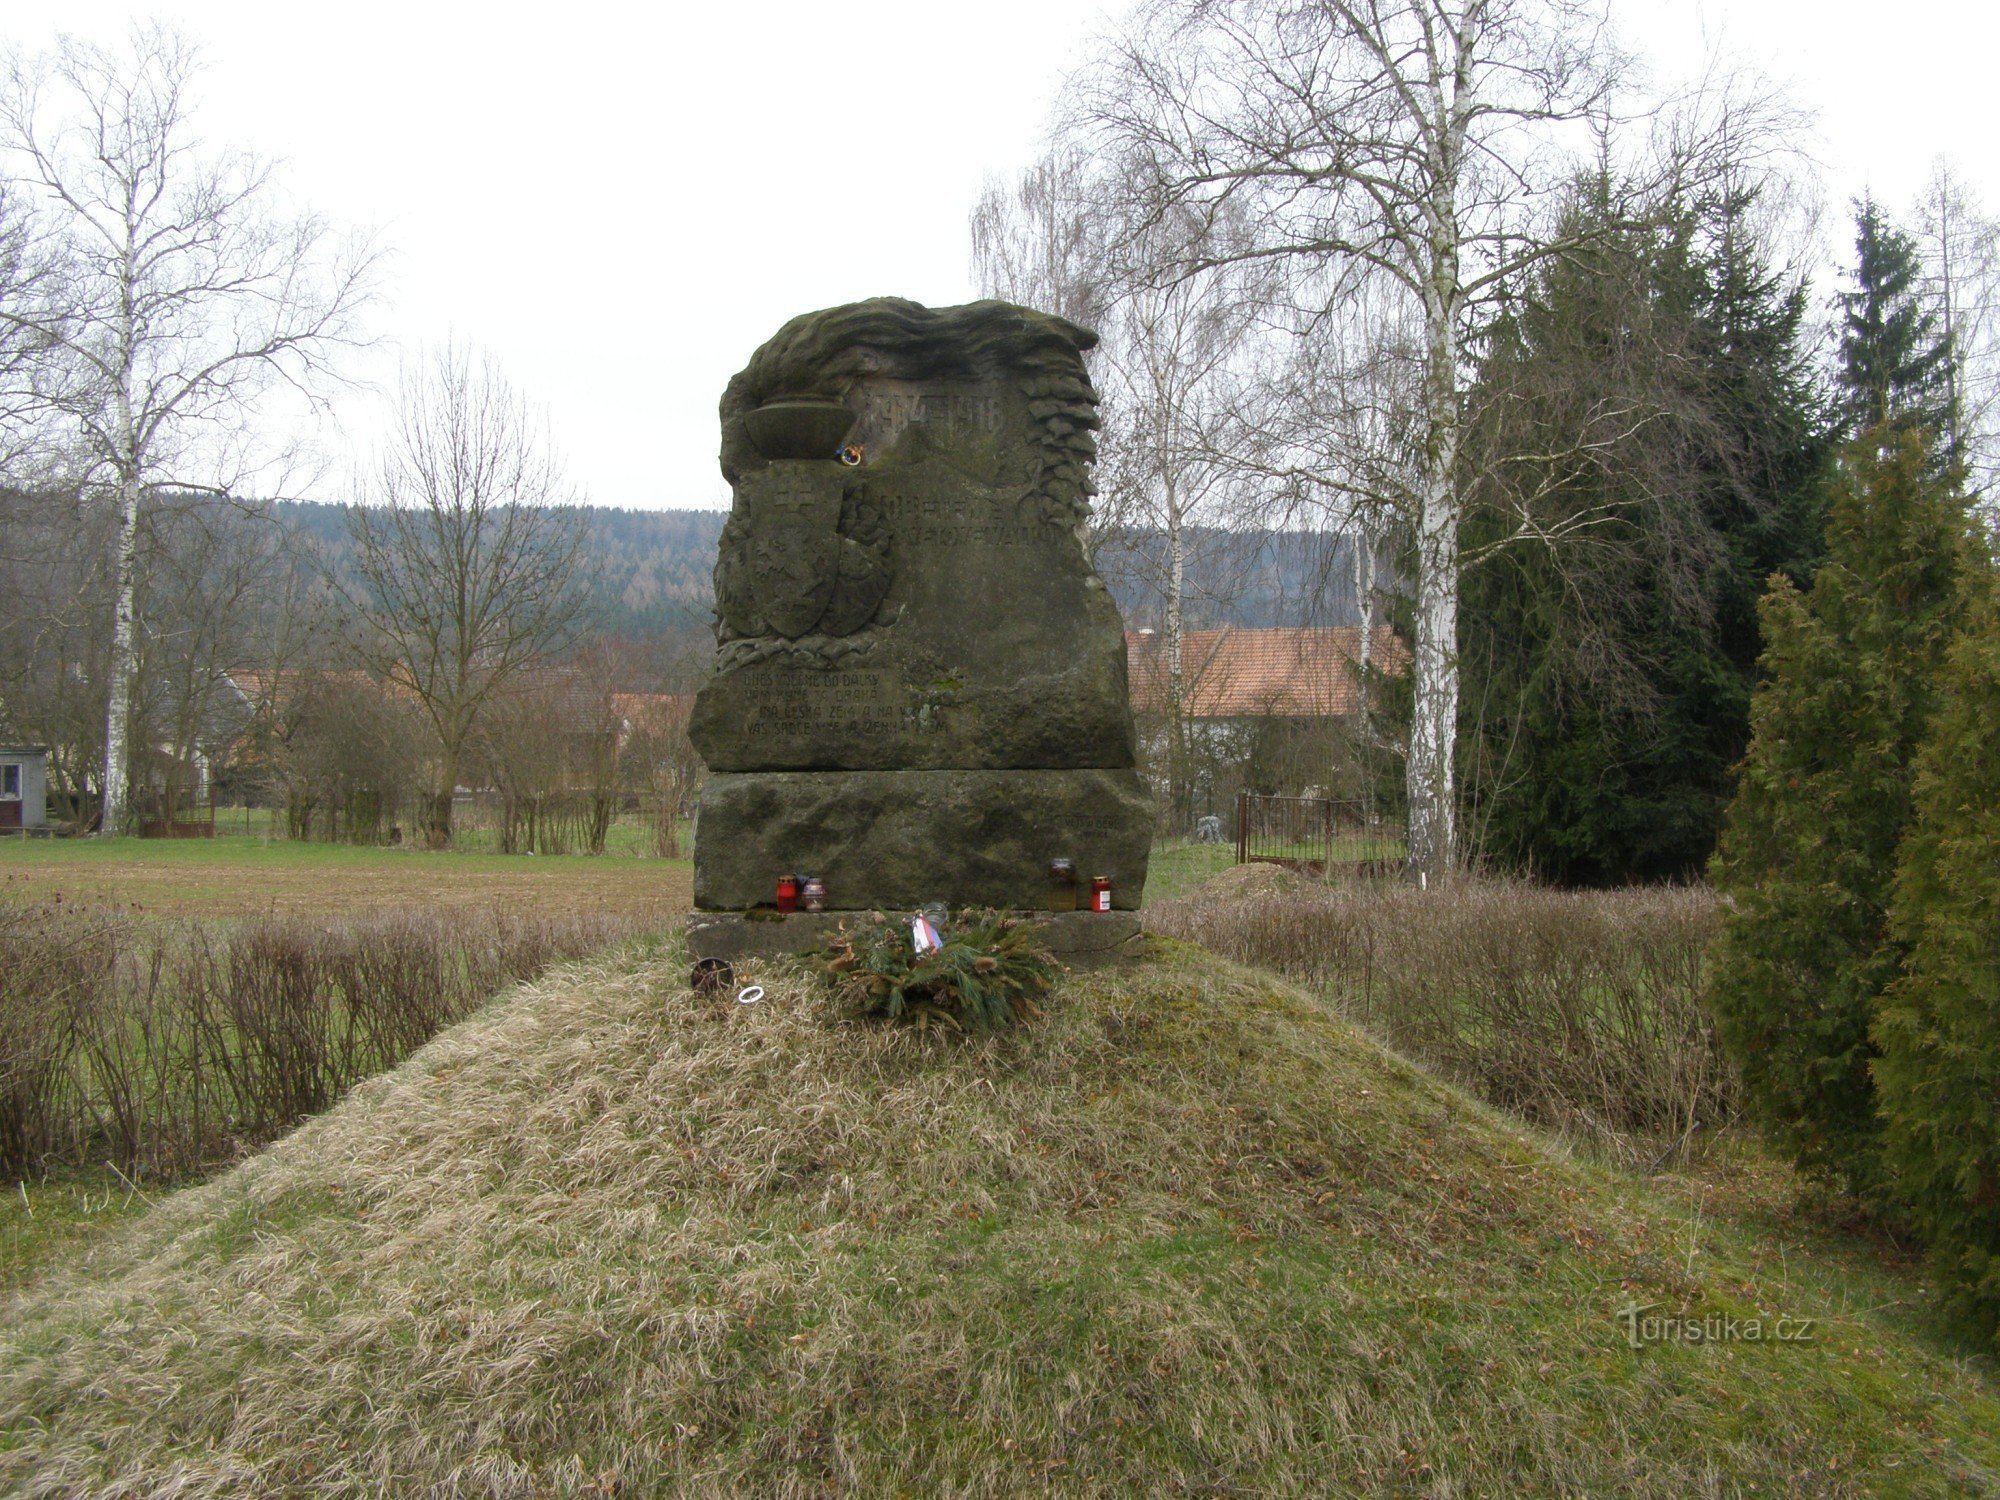 Lukavec u Hořice - muistomerkki 1. St. sota